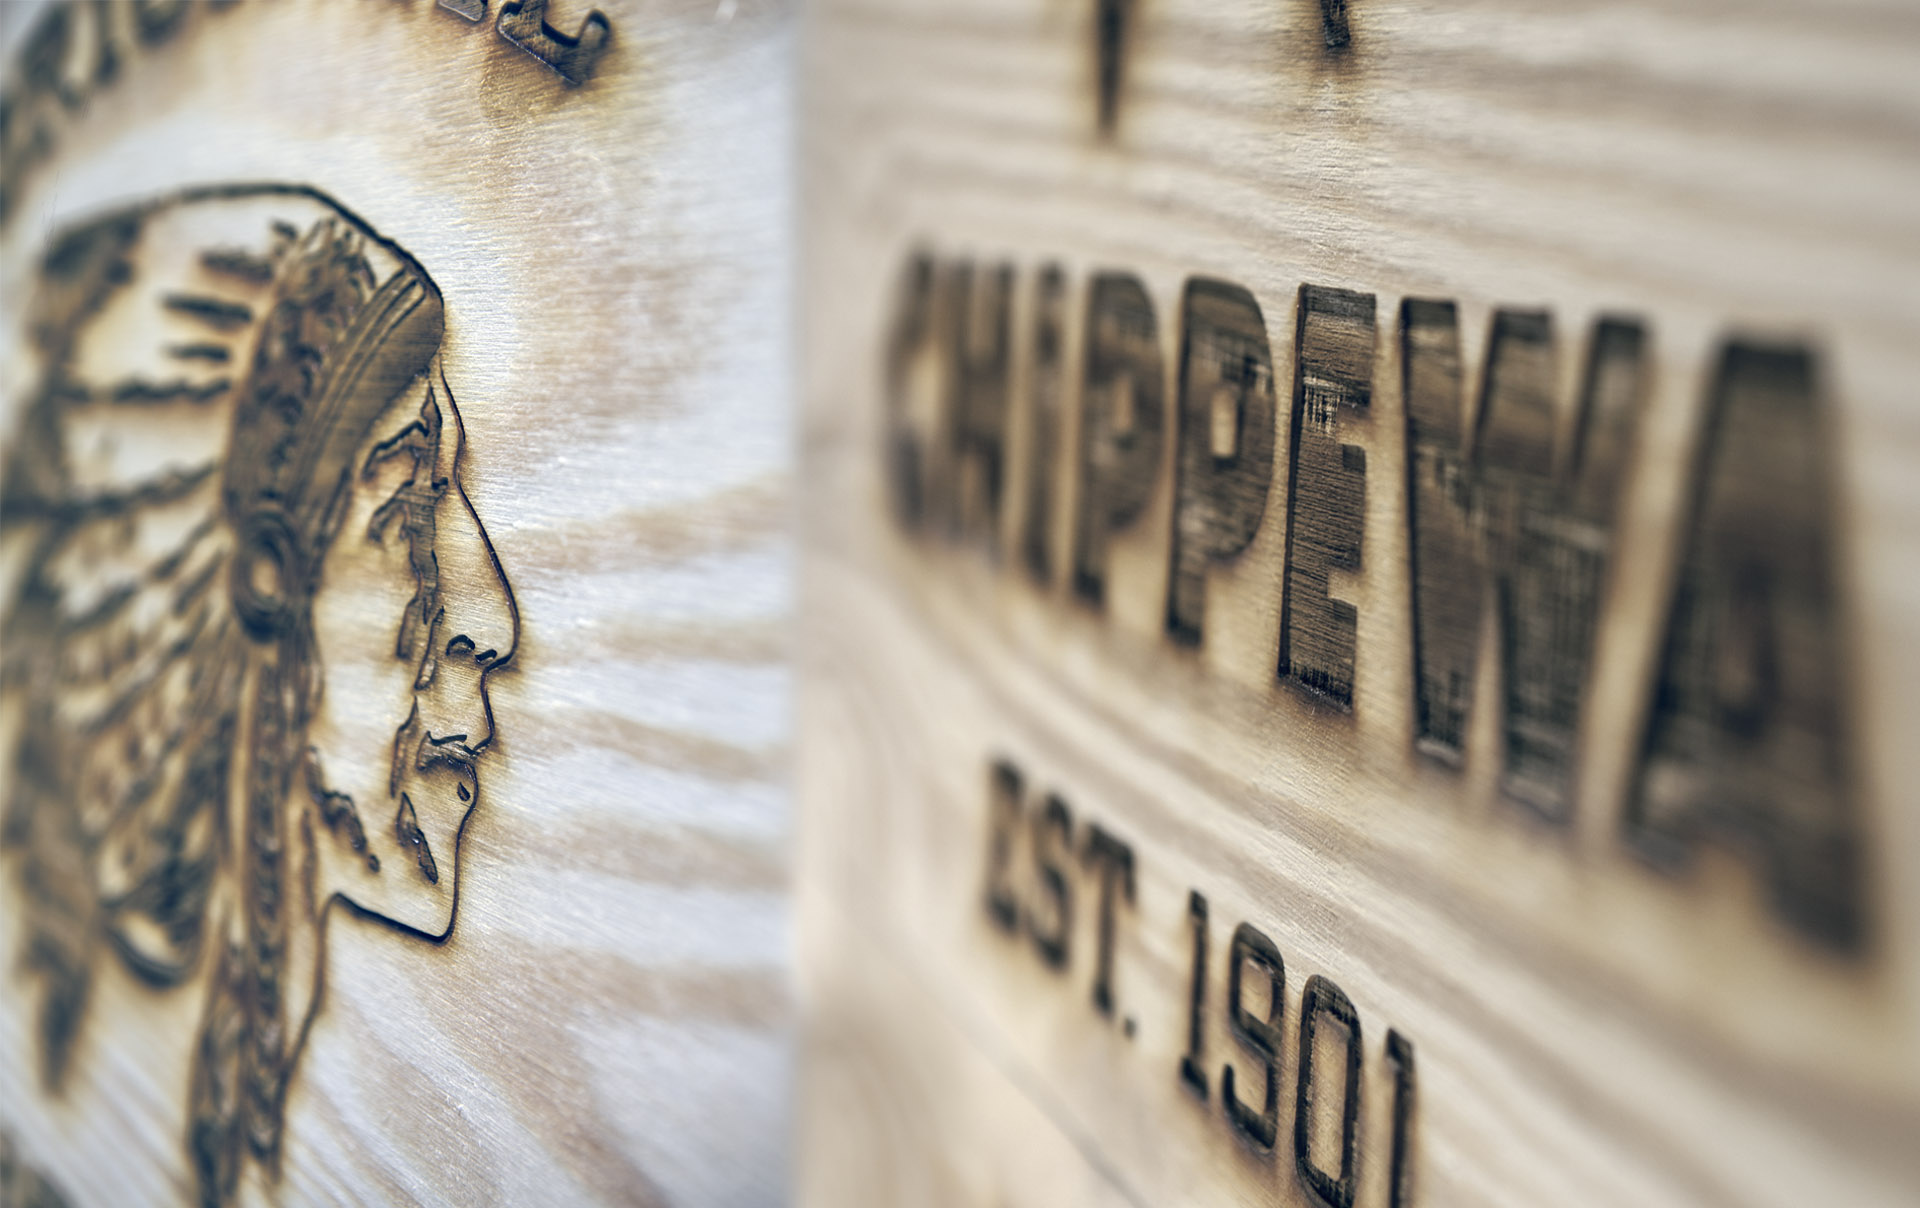 Chippewa Logo Holz Lasergravur,Lasergravur in Holz, Schuhhersteller, Holzbearbeitung, Innenausbau, Möbel, interior, Design, gestaltung, grafik, indianer, native american, first nation american